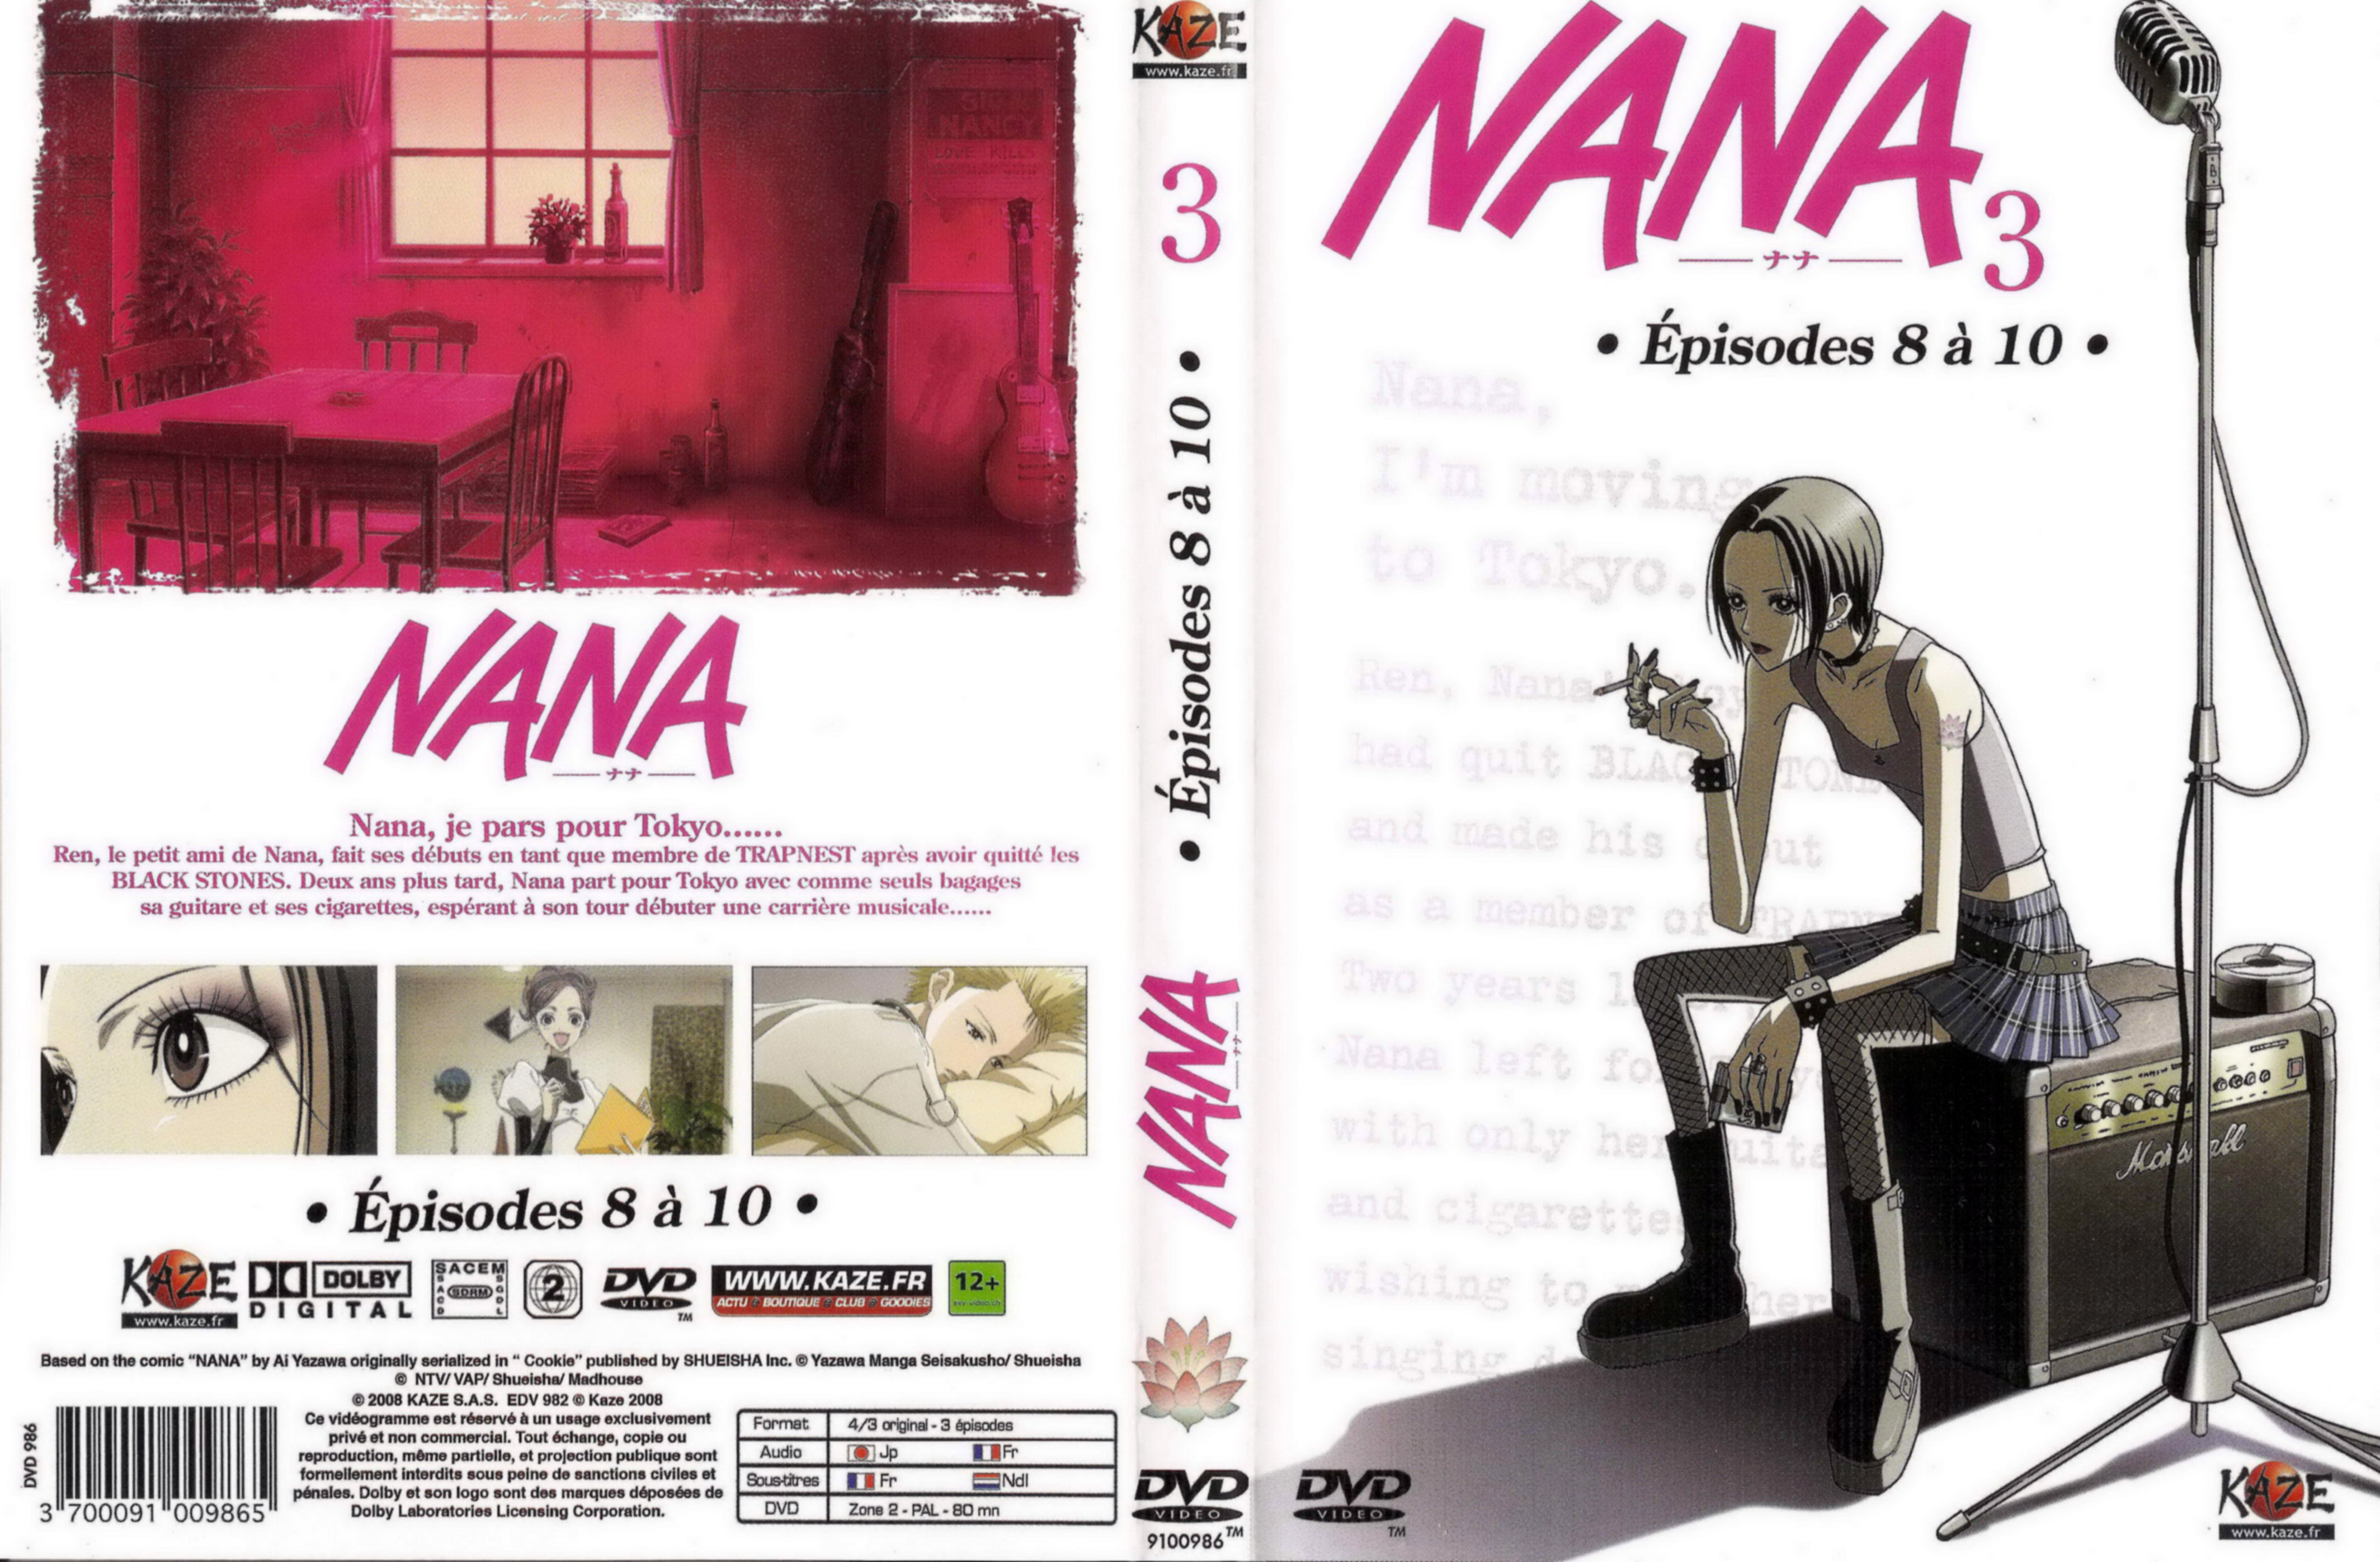 Jaquette DVD Nana DVD 3